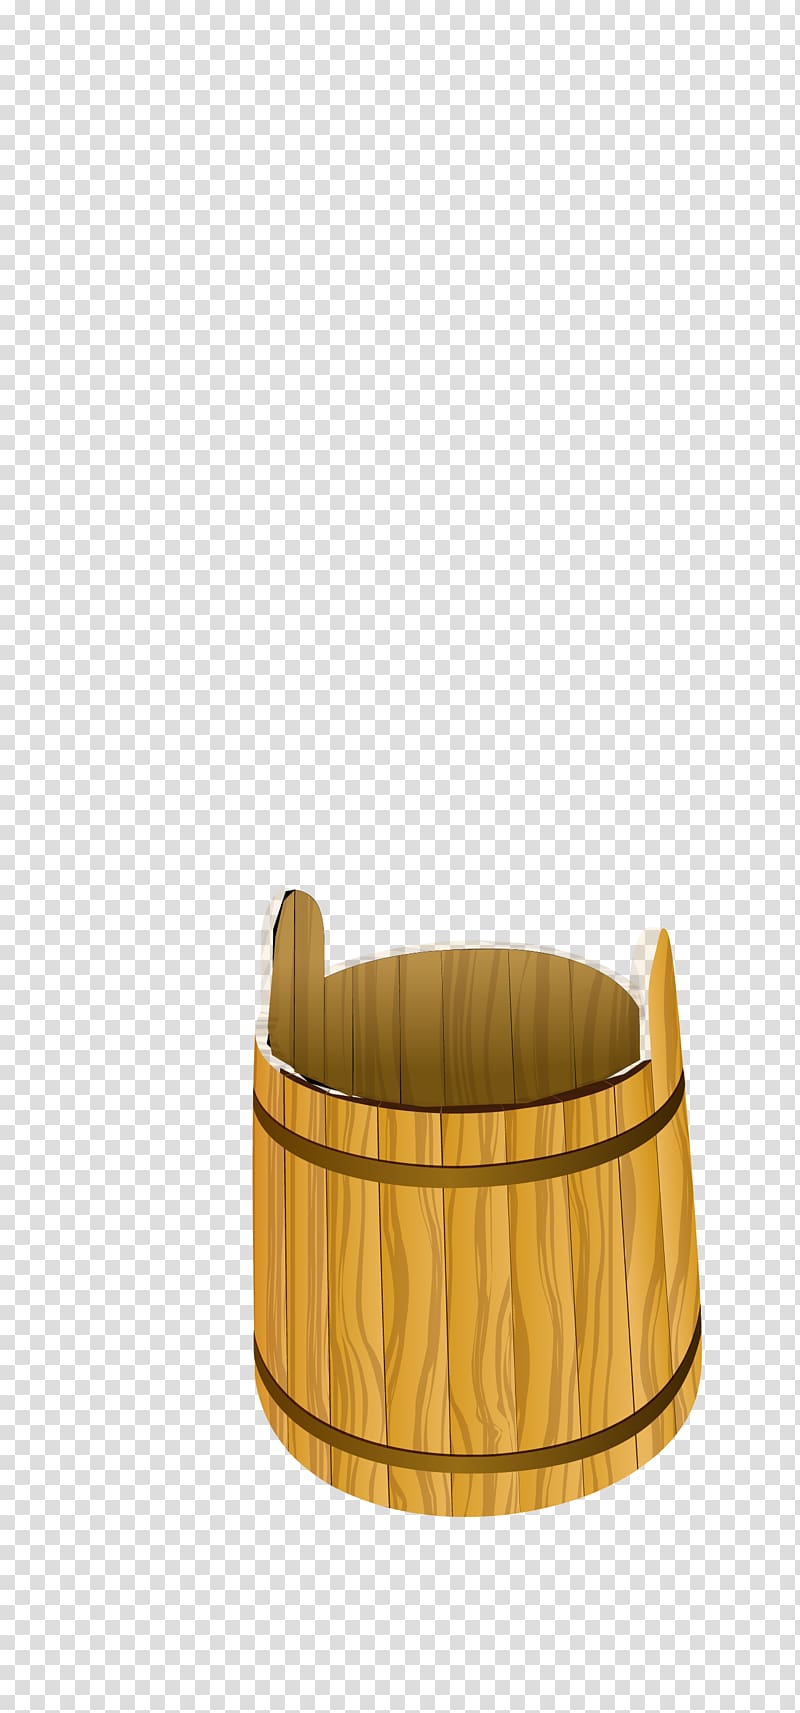 Euclidean Bucket Illustration, bucket transparent background PNG clipart